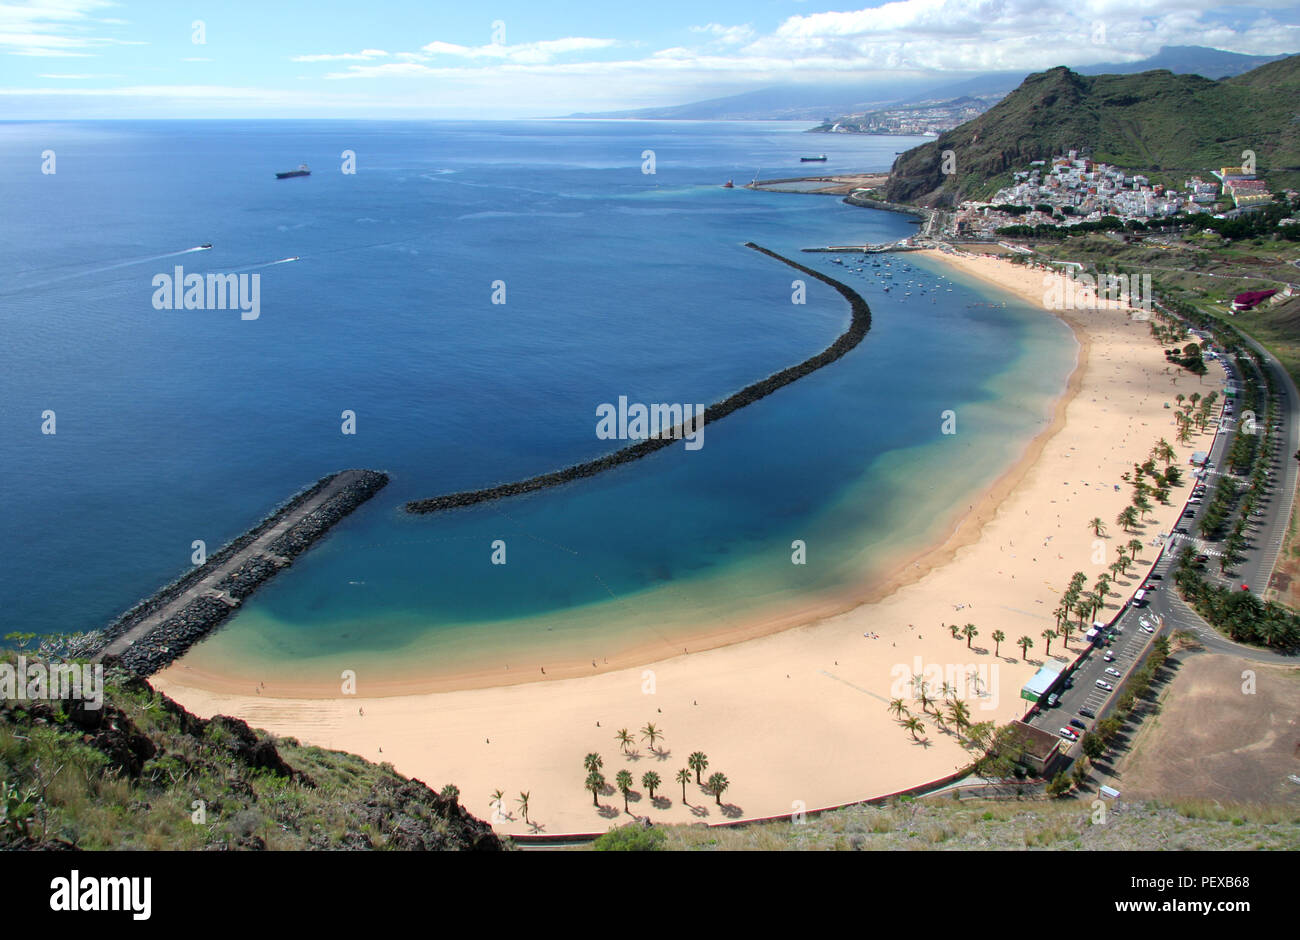 The Playa De Las Teresitas is the most beautiful beach in Tenerife, just a couple of miles north of the island capital Santa Cruz. Stock Photo